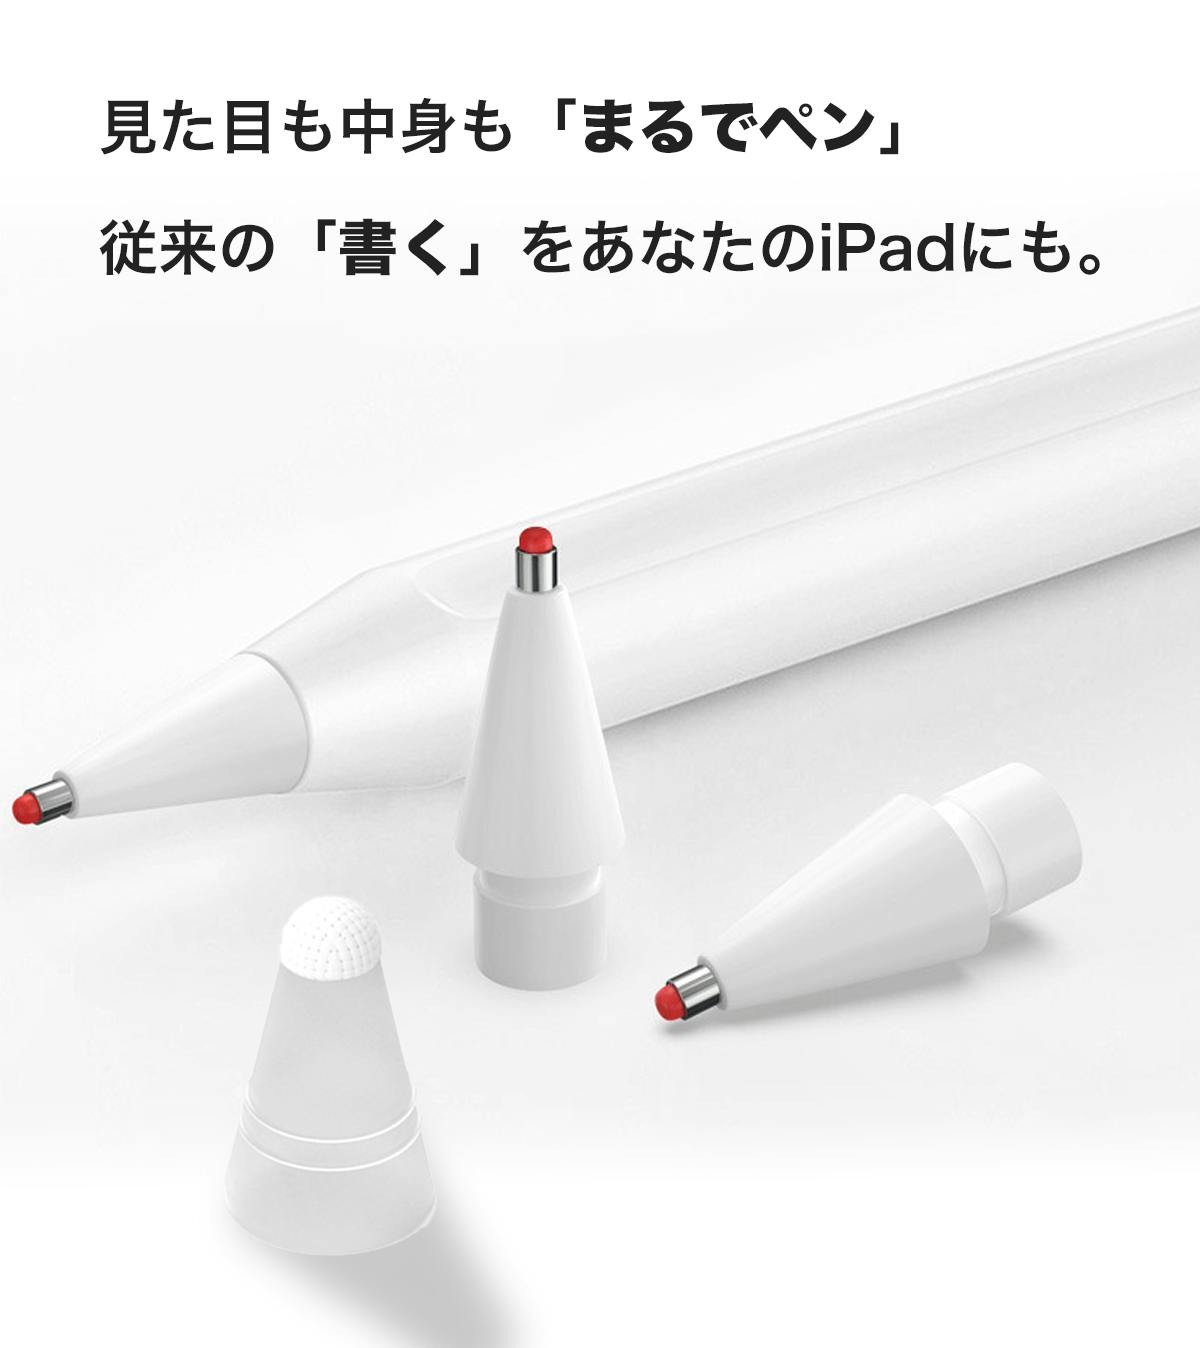 Apple Pencil Tips - iPadアクセサリー